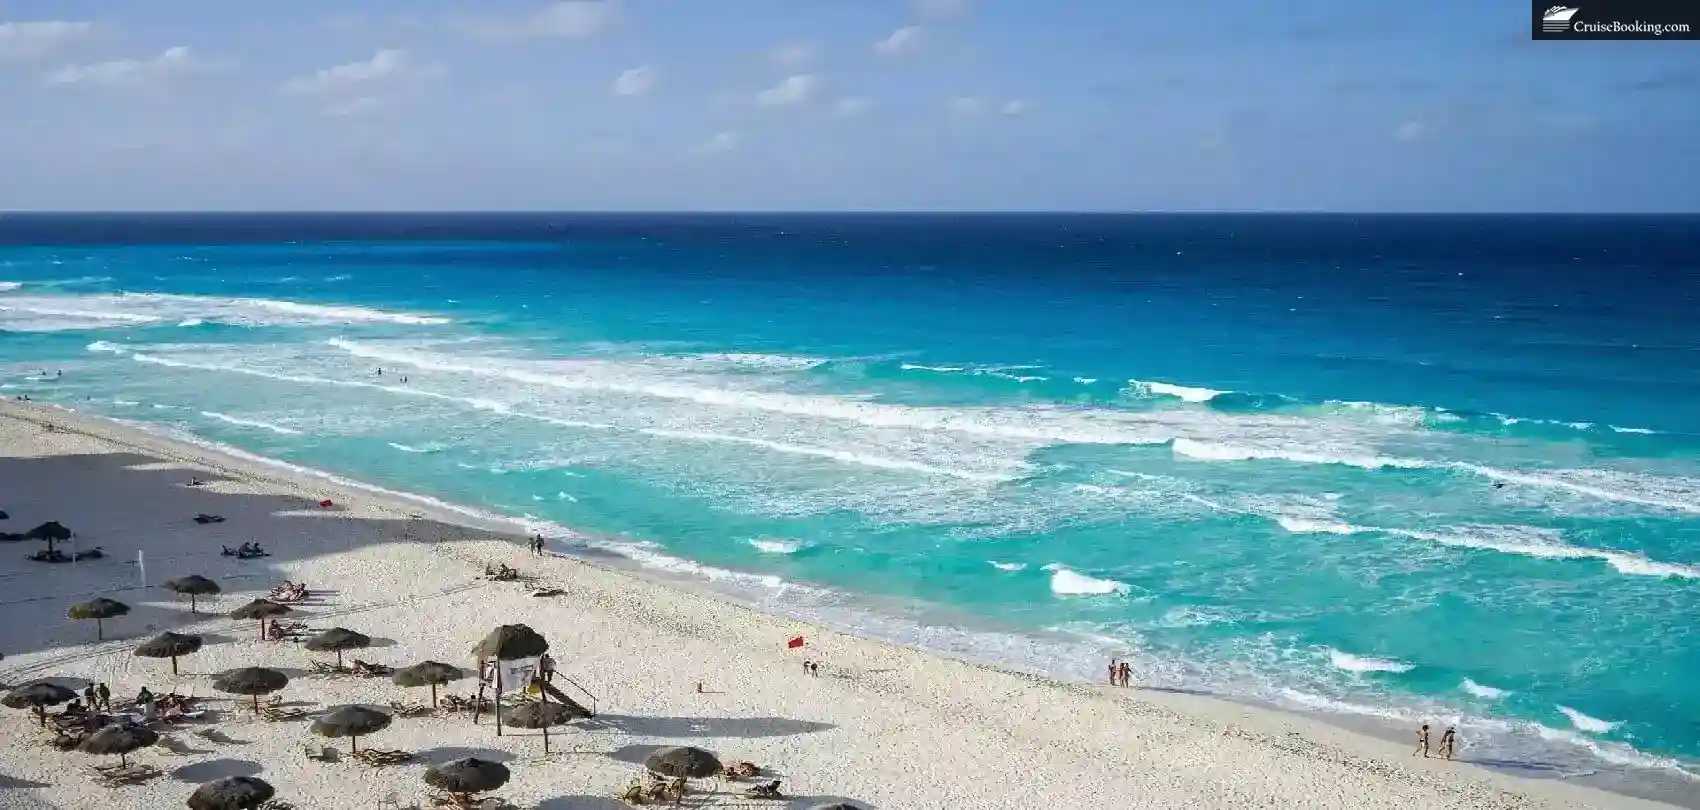 Cancun, Mexico